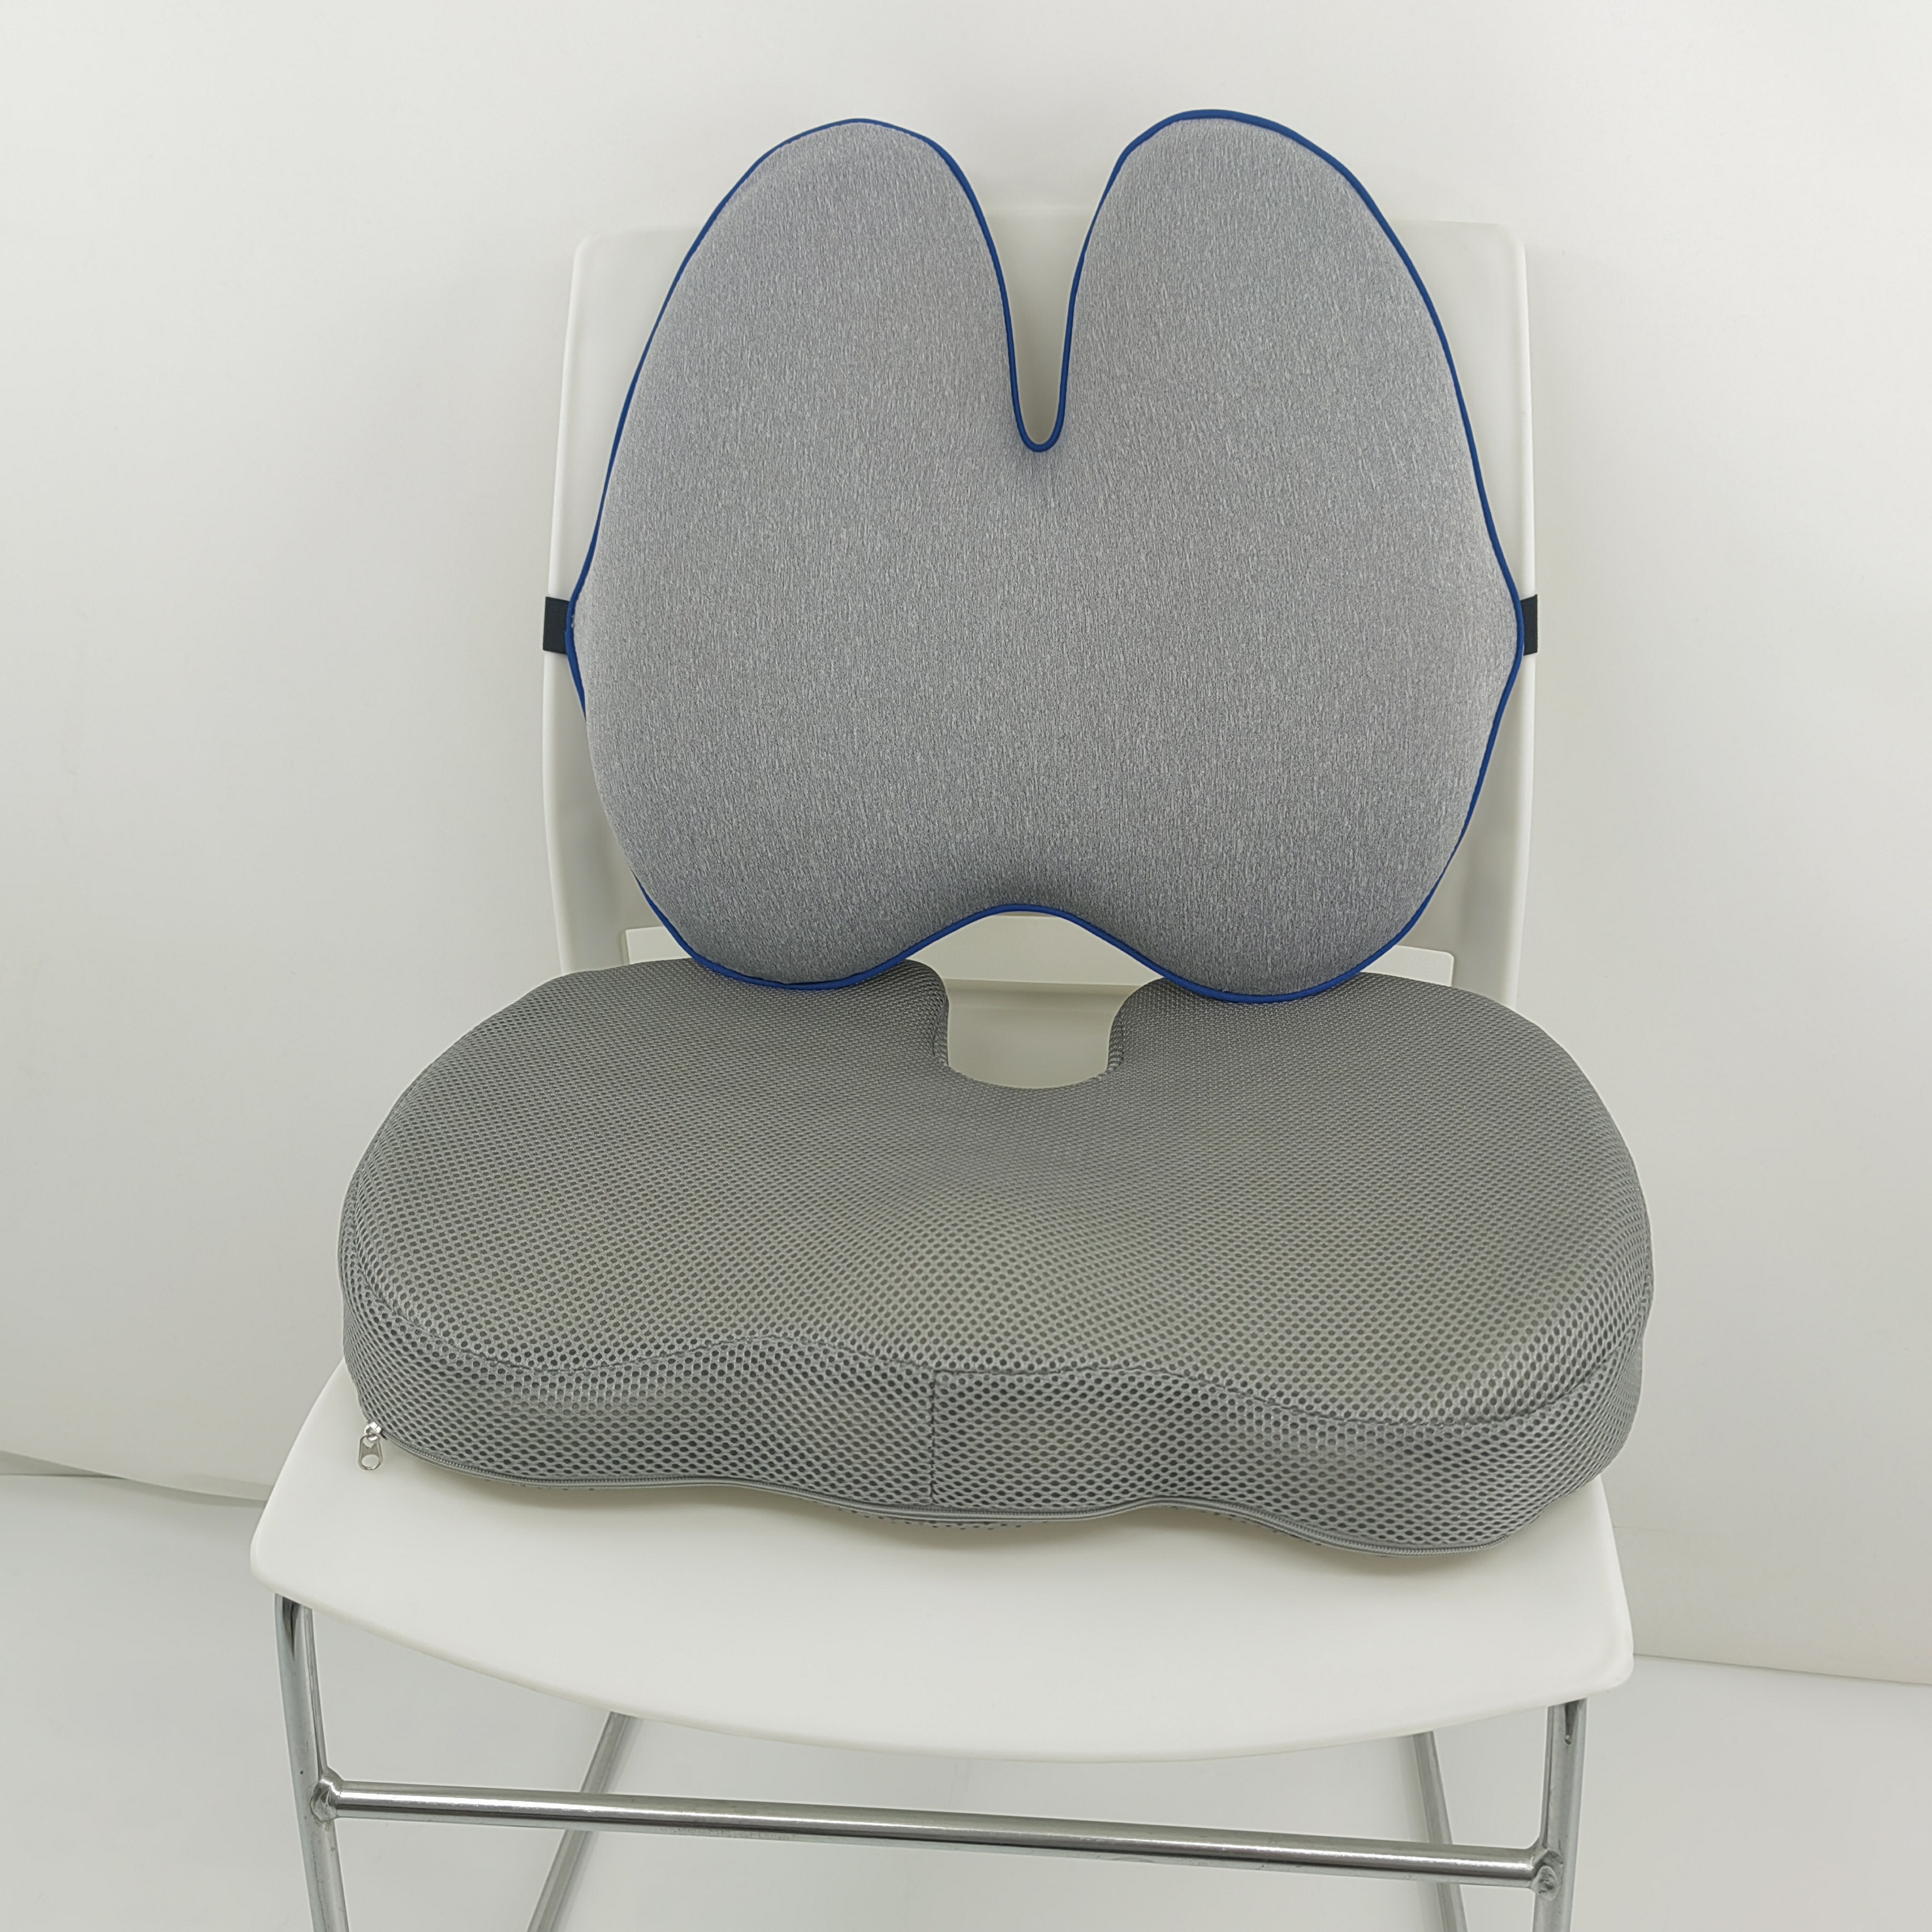 Seat Cushion & Lumbar Support Pillow for Office Chair, Car, Wheelchair  Memory Foam Chair Cushion for Sciatica, Lower Back & Tailbone Pain Relief  Desk Pad 